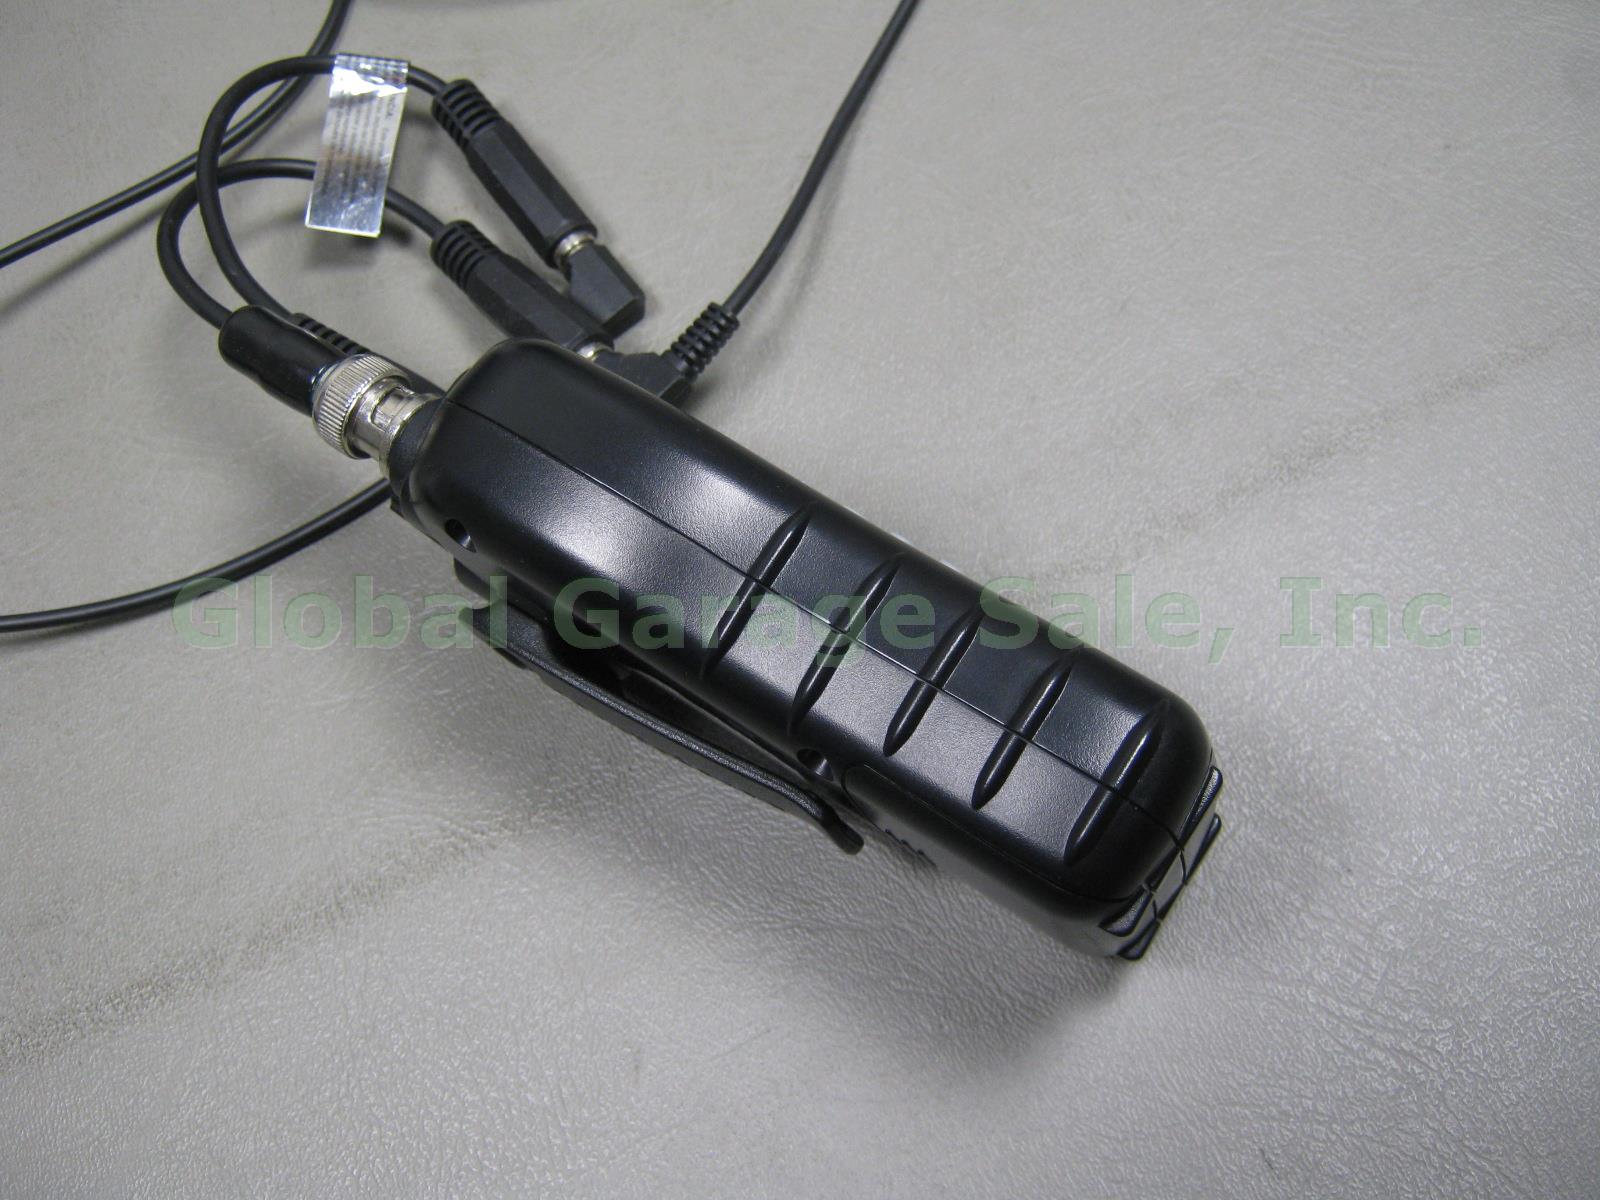 Uniden BC92XLT Handheld Scanner Radio + 2 NASCAR Racing TP60 Headphones Headsets 5